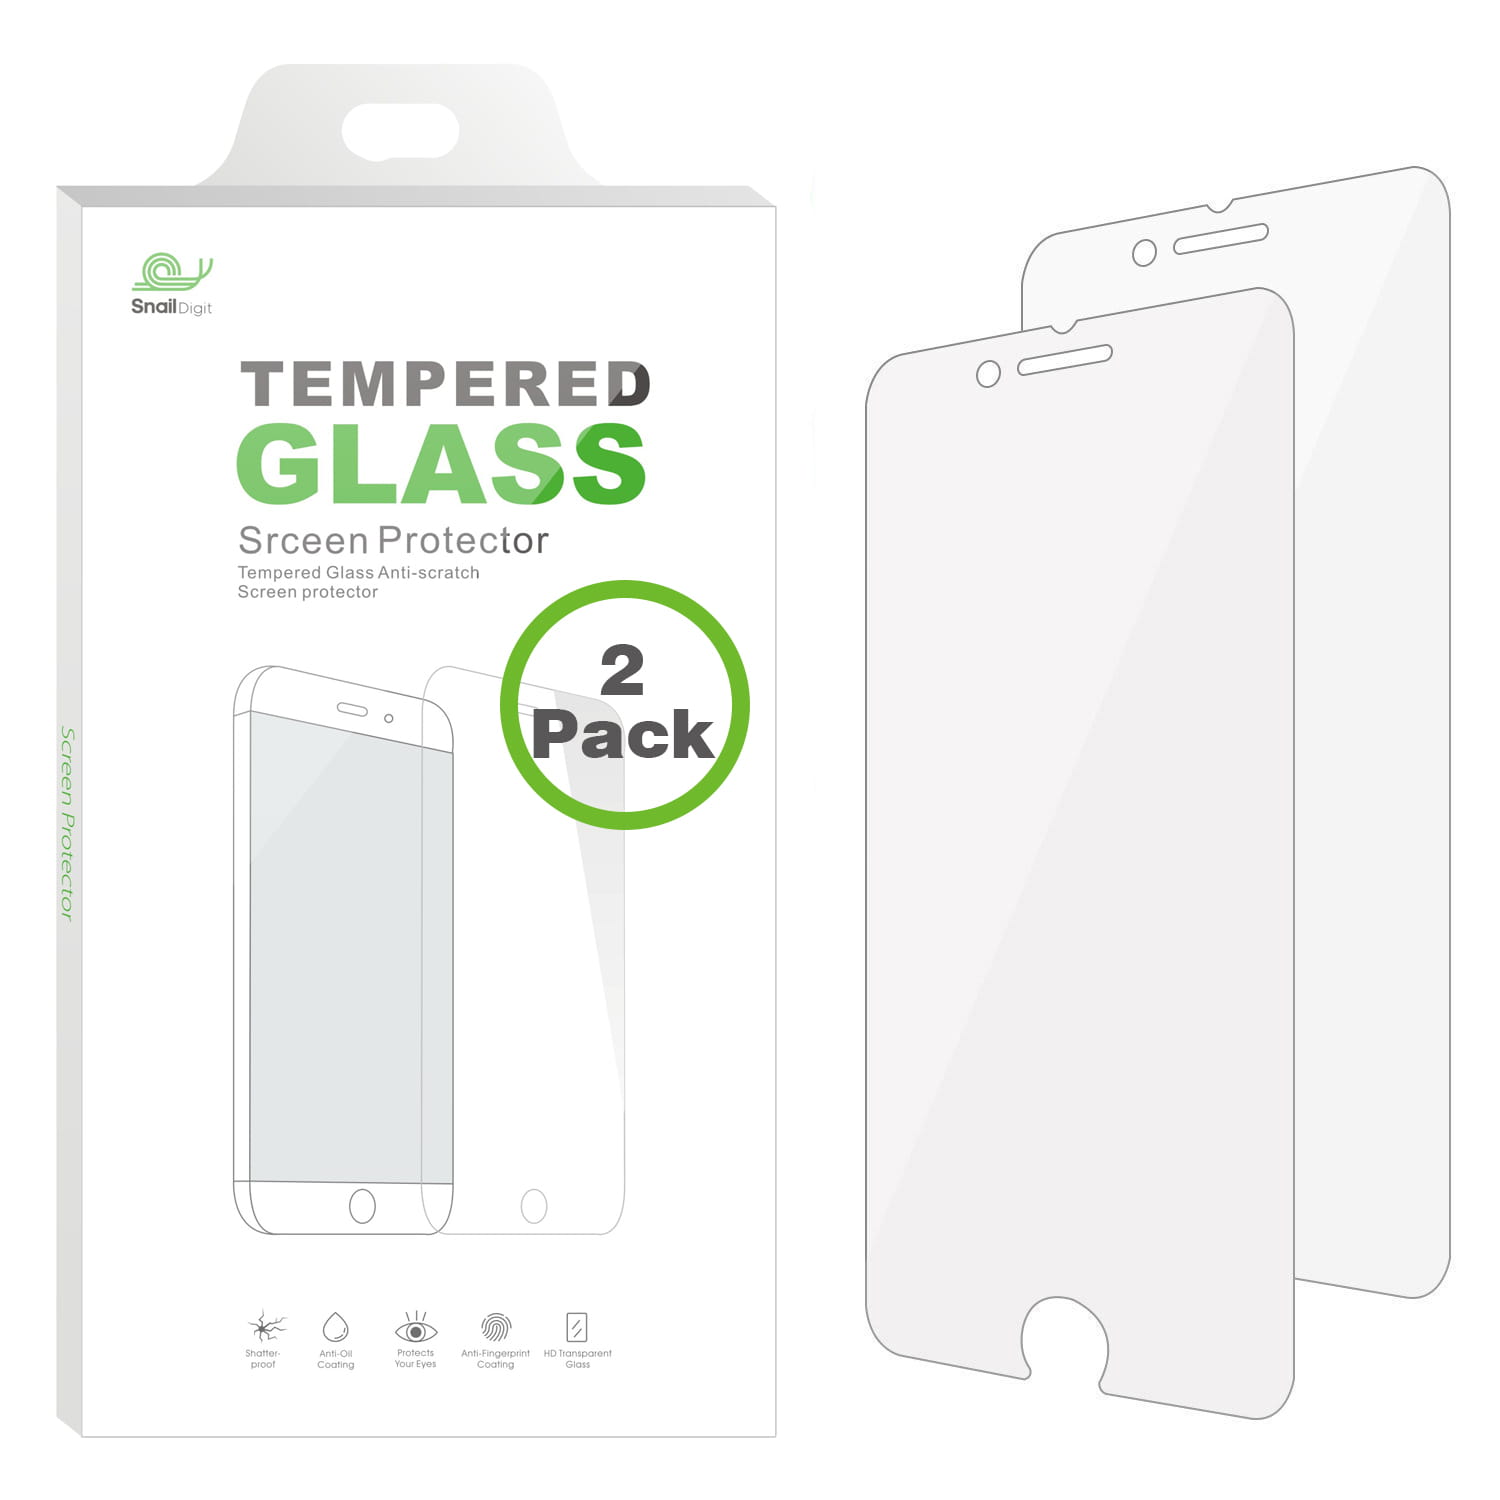 2 Pack 6S Plus UNEXTATI Premium HD Anti Scratch Tempered Glass Screen Protector Film for iPhone 7S Plus 7 Plus 8S Plus iPhone 6 Plus 8 Plus Screen Protector 